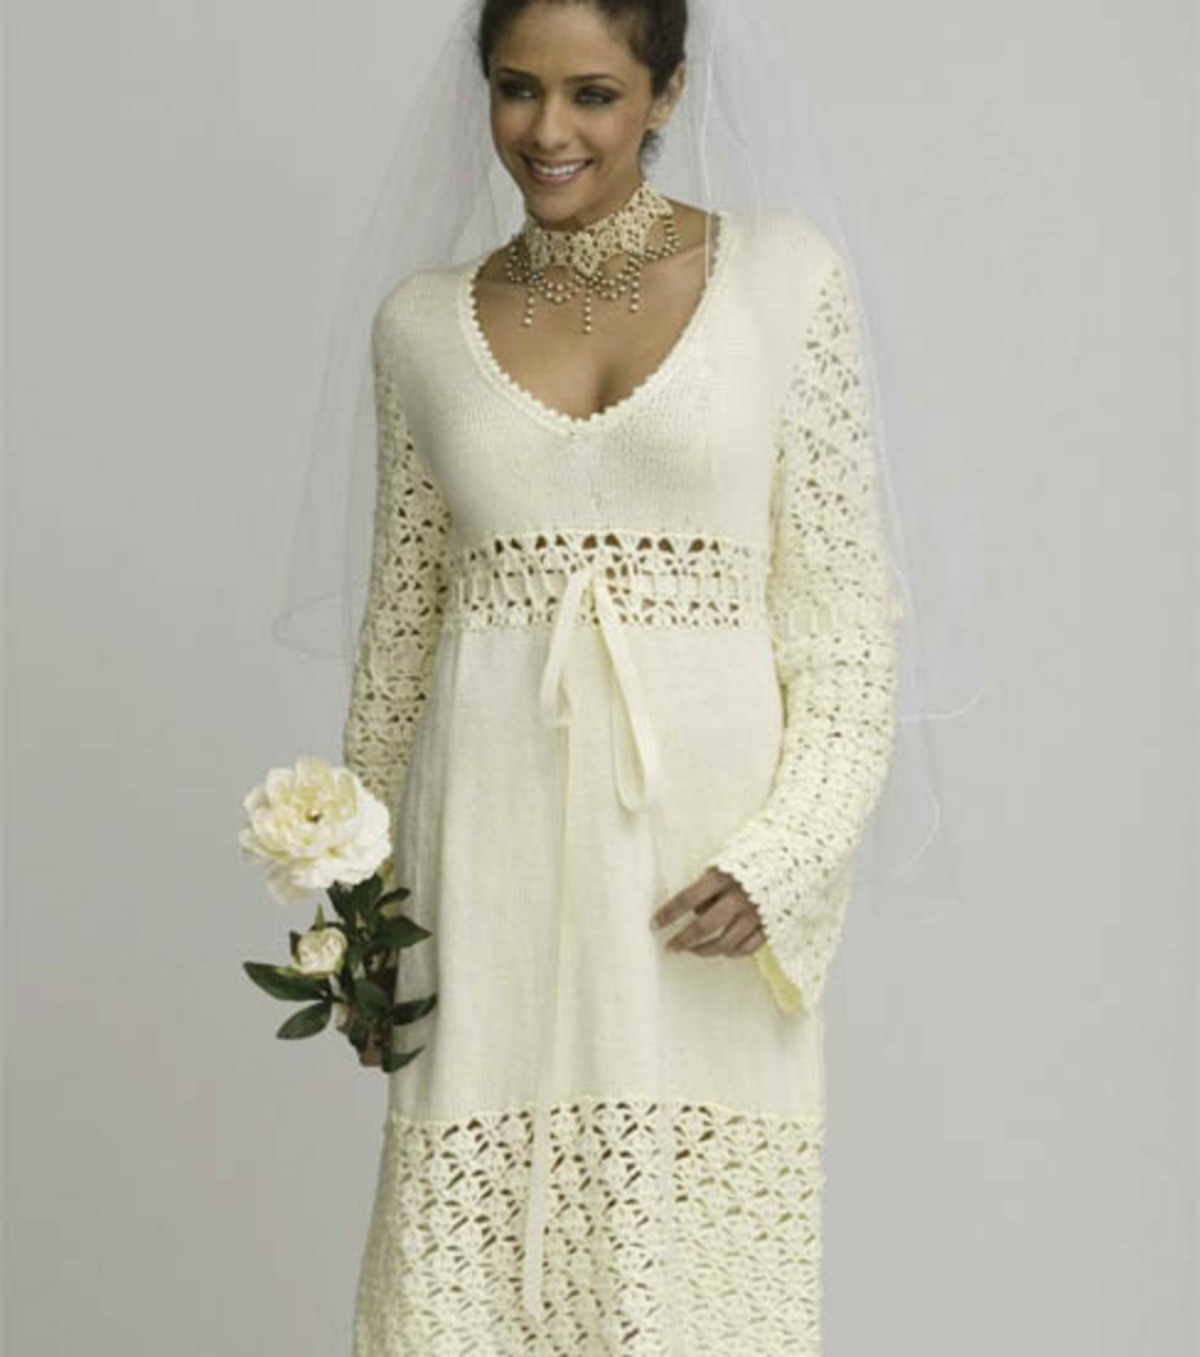 Crochet Wedding Dress Patterns Crochet Wedding Dress Patterns And Wedding Accessories To Crochet